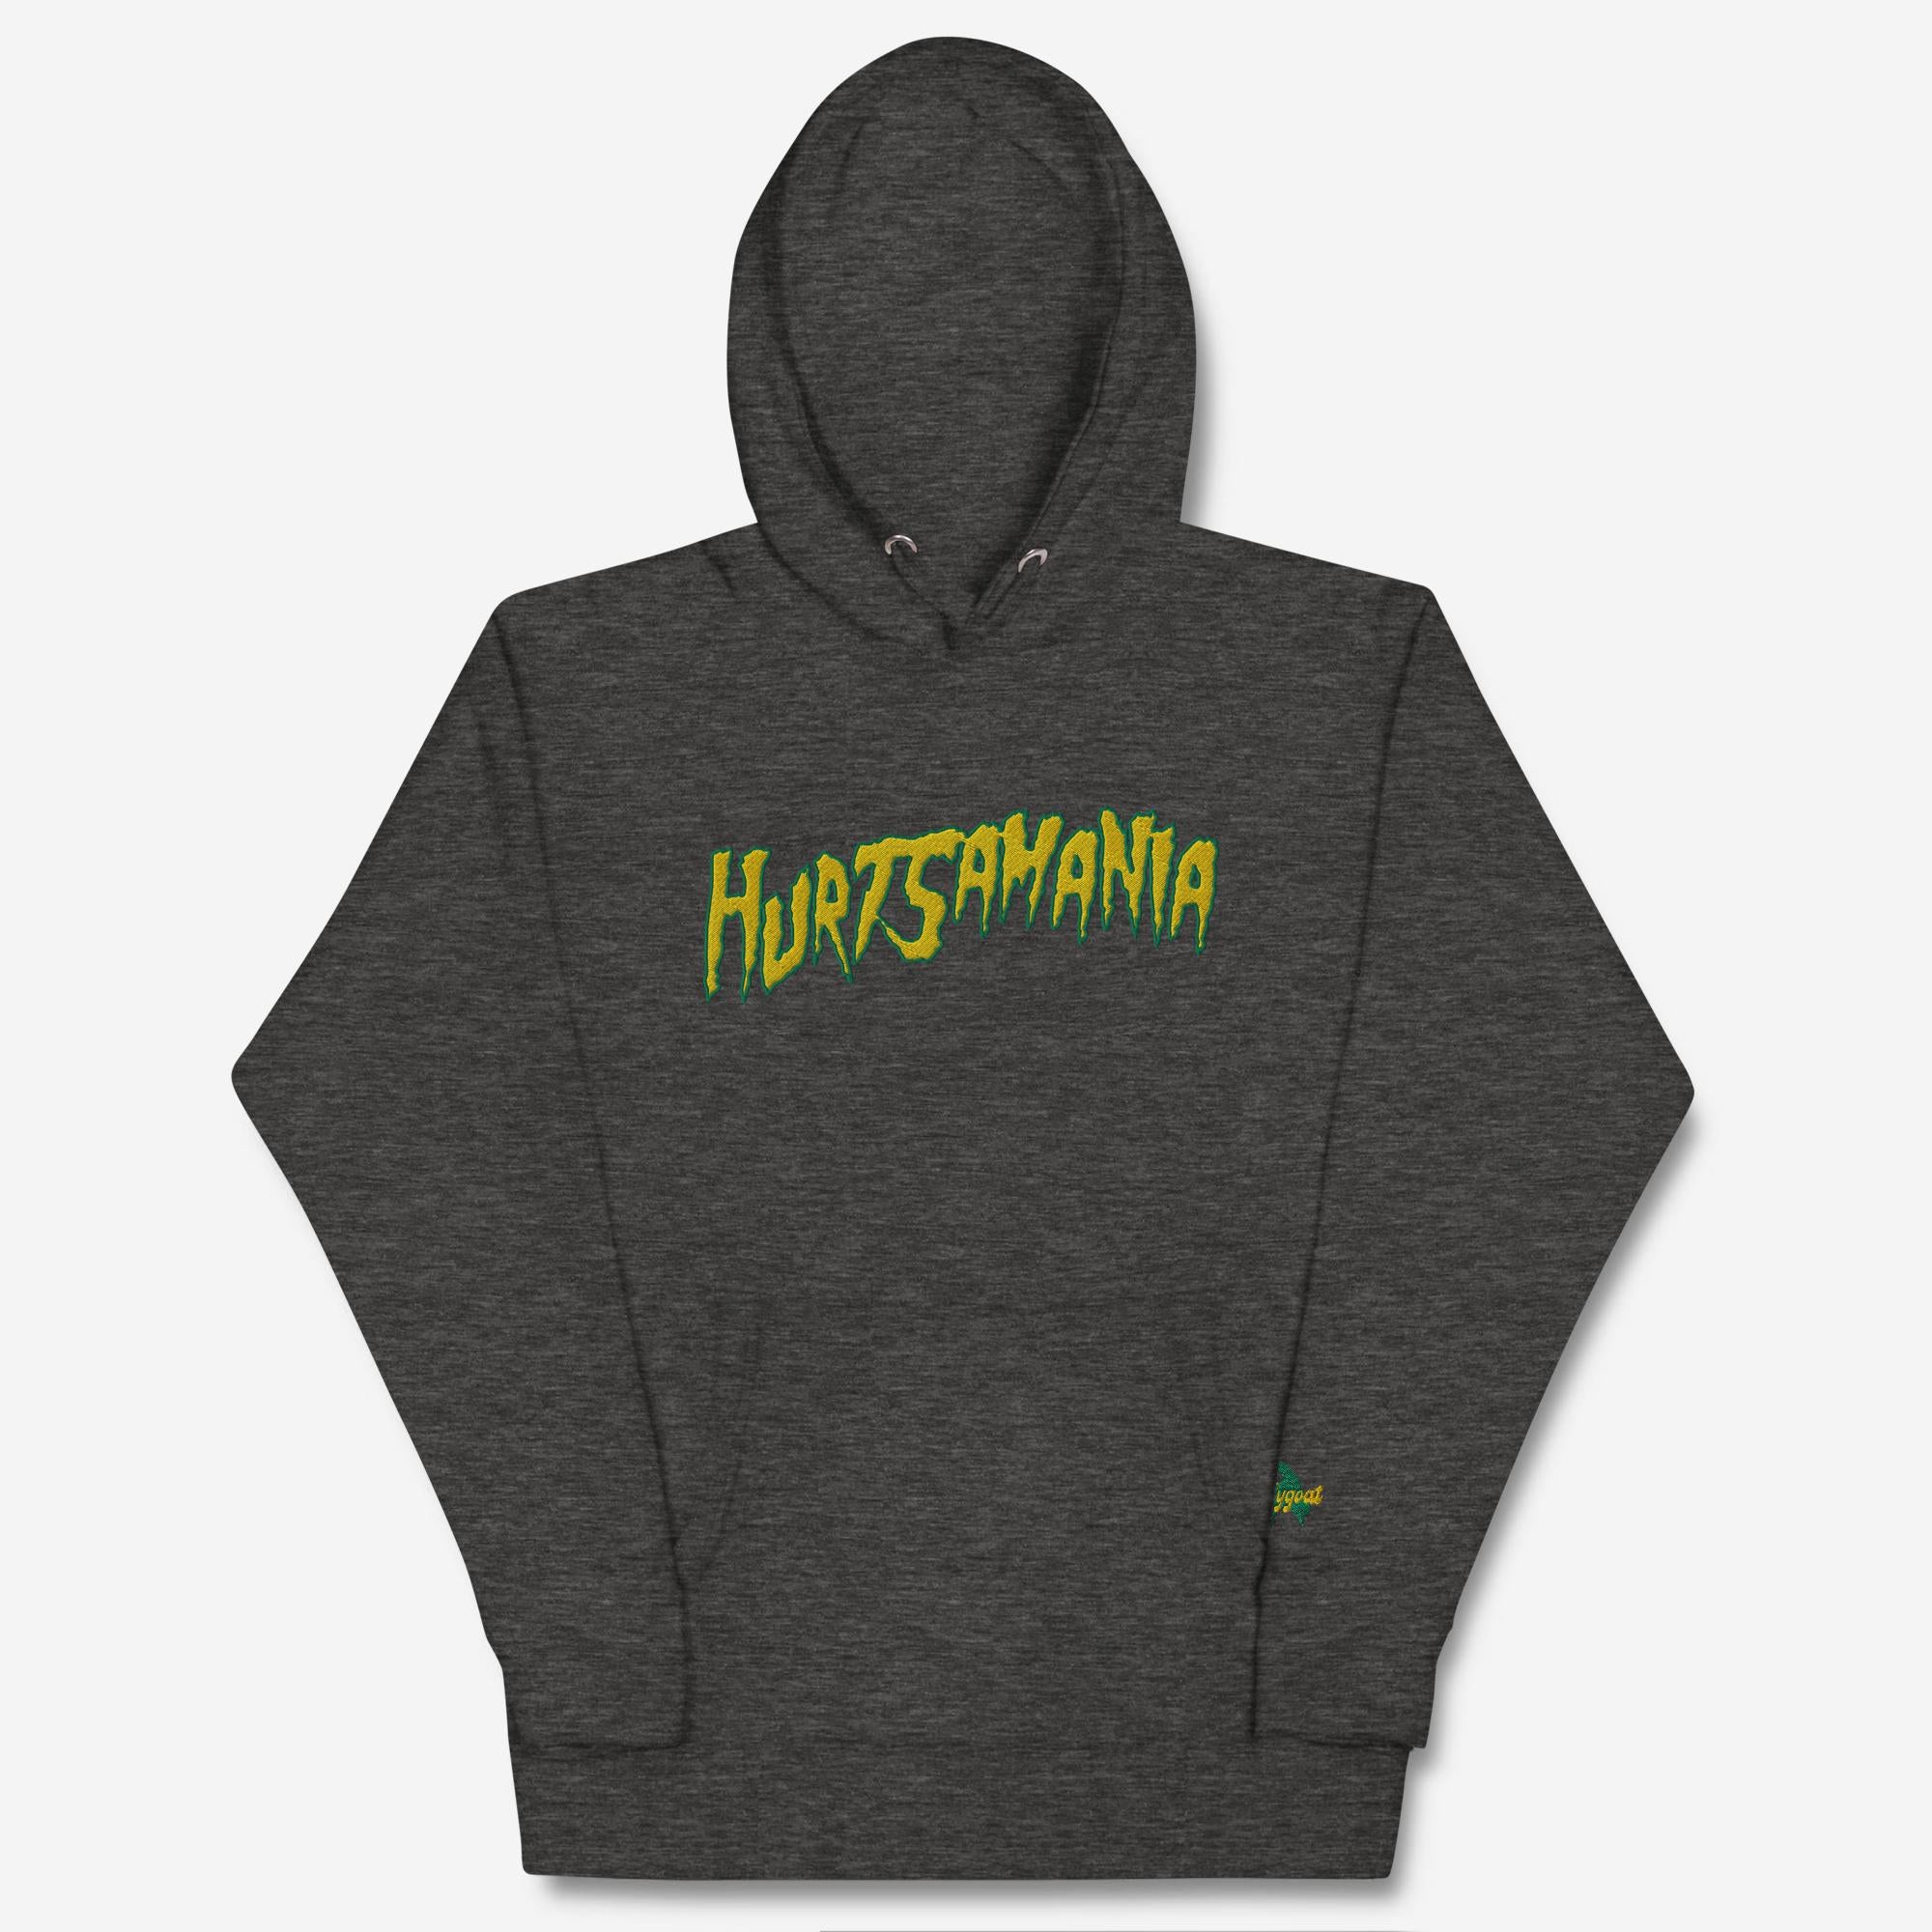 "Hurtsamania" Embroidered Hoodie